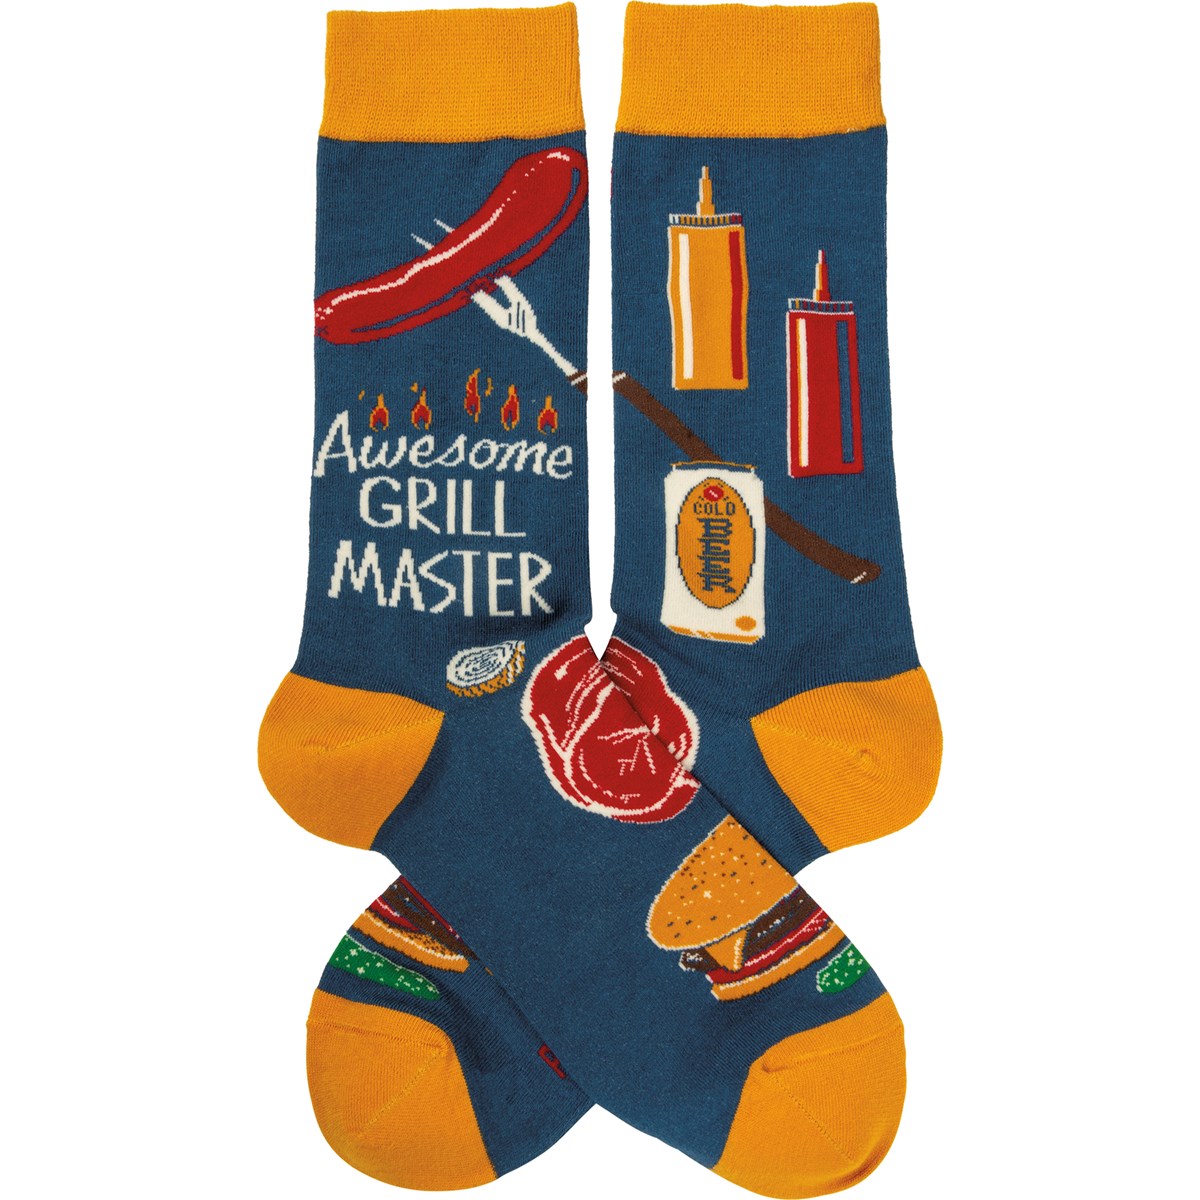 Awesome Grill Master Socks - Cotton, Nylon, Spandex